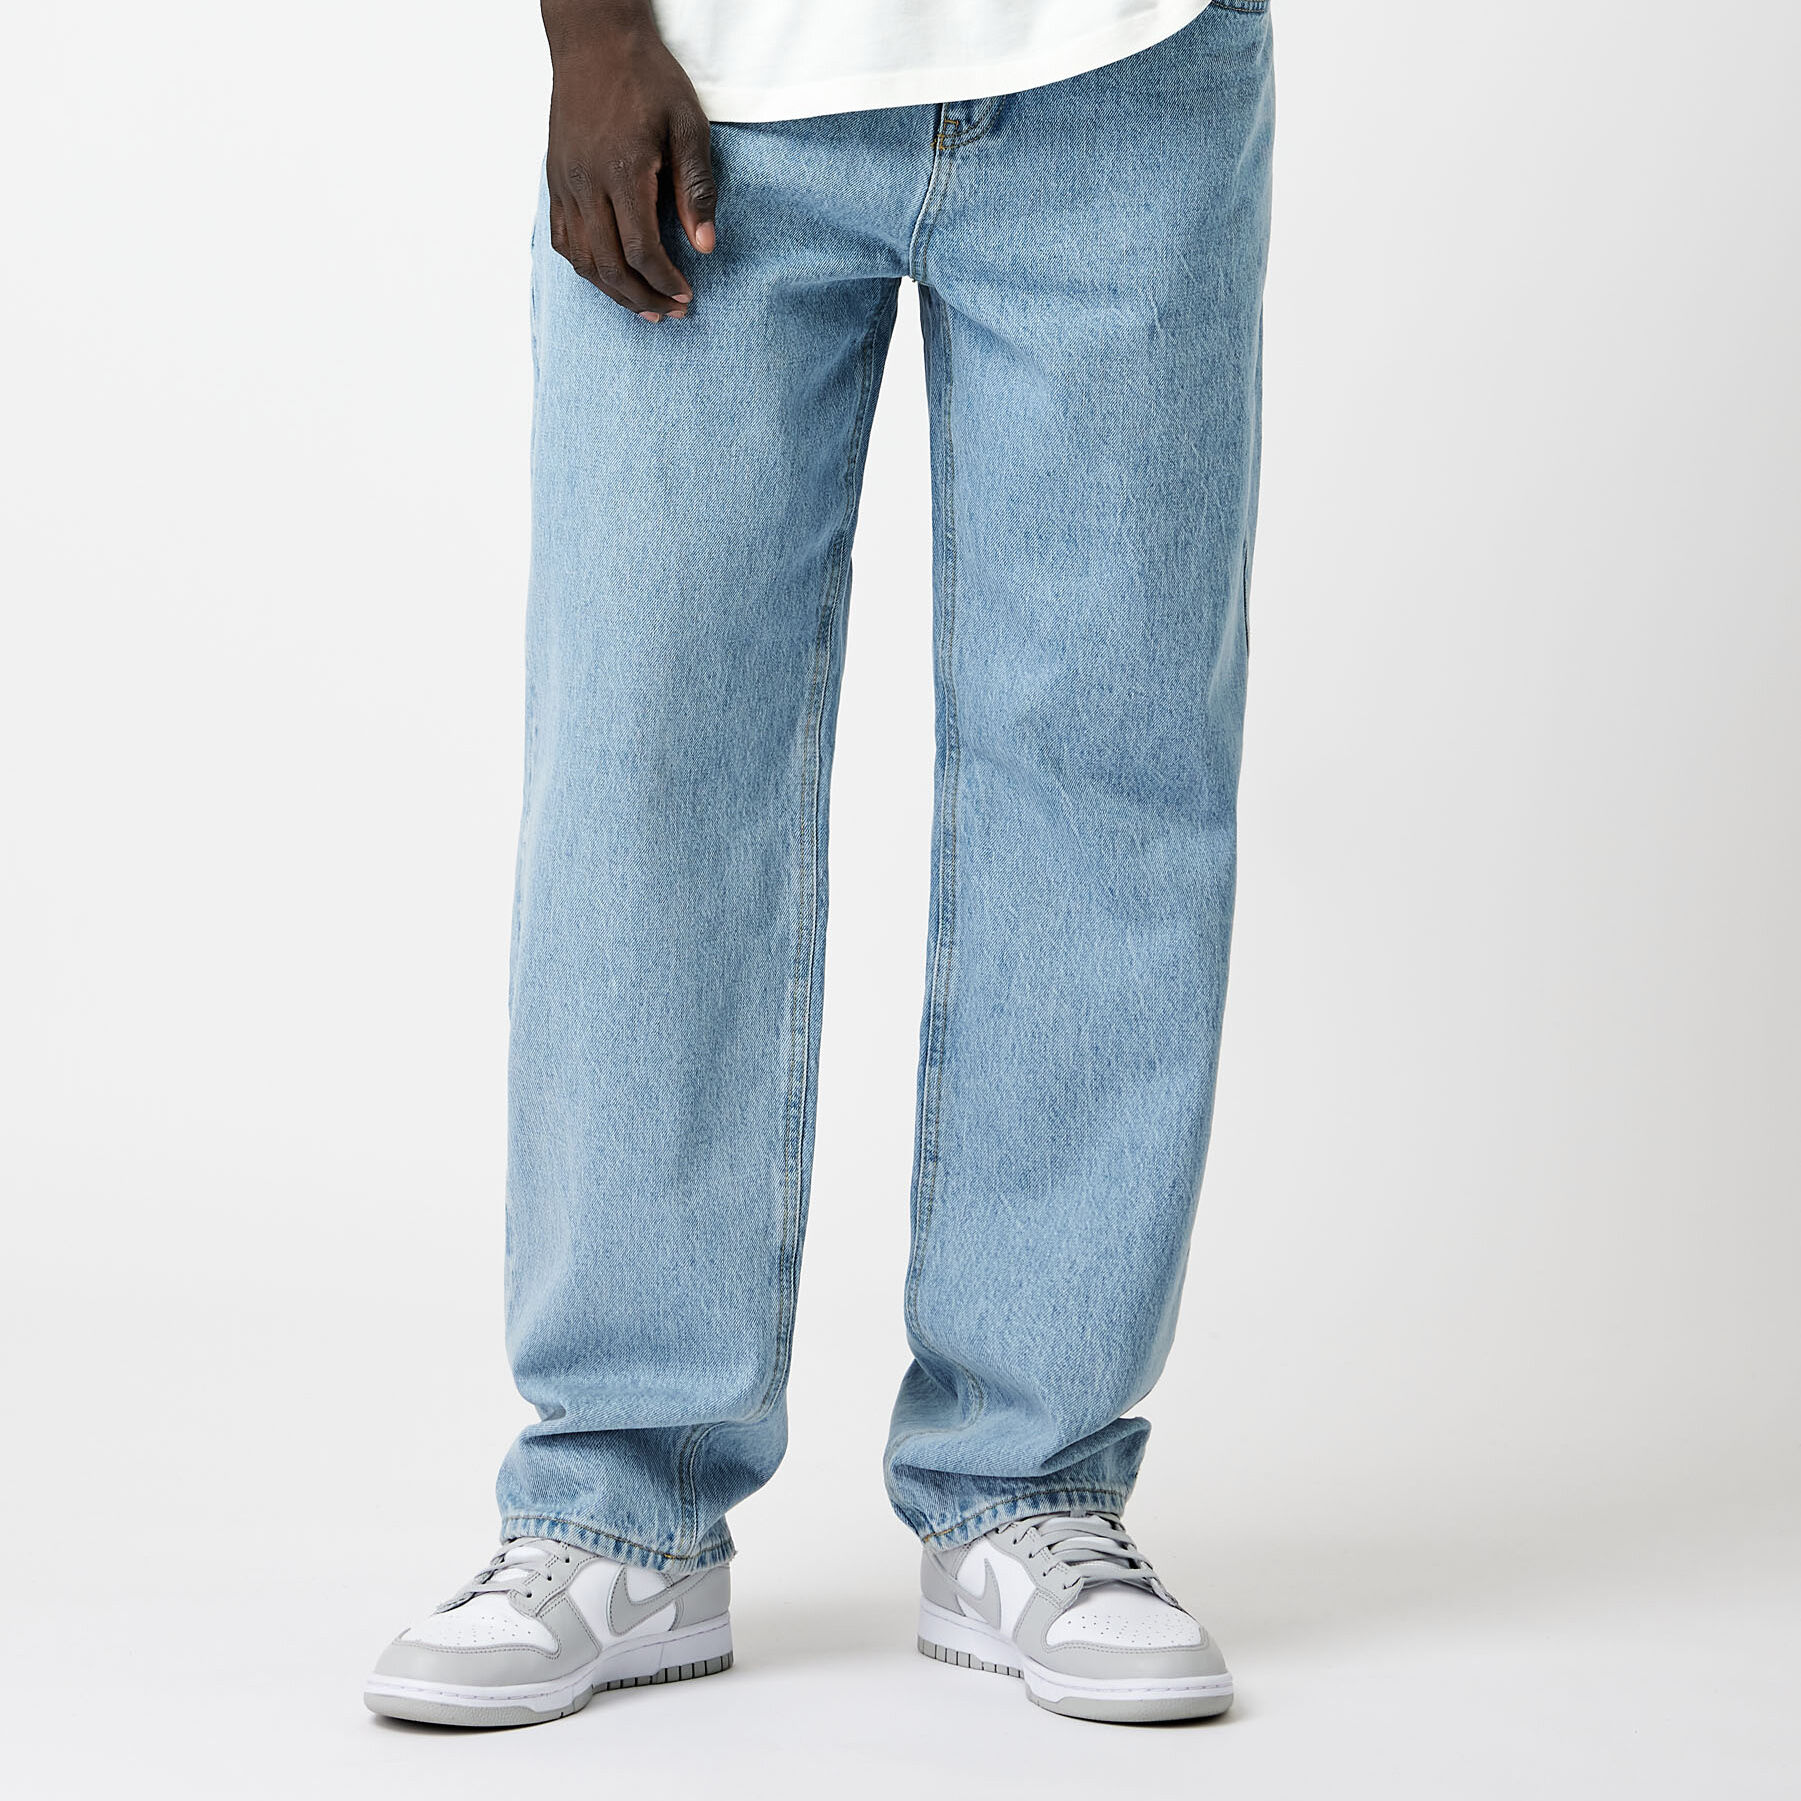 baggy jeans with air jordan 1